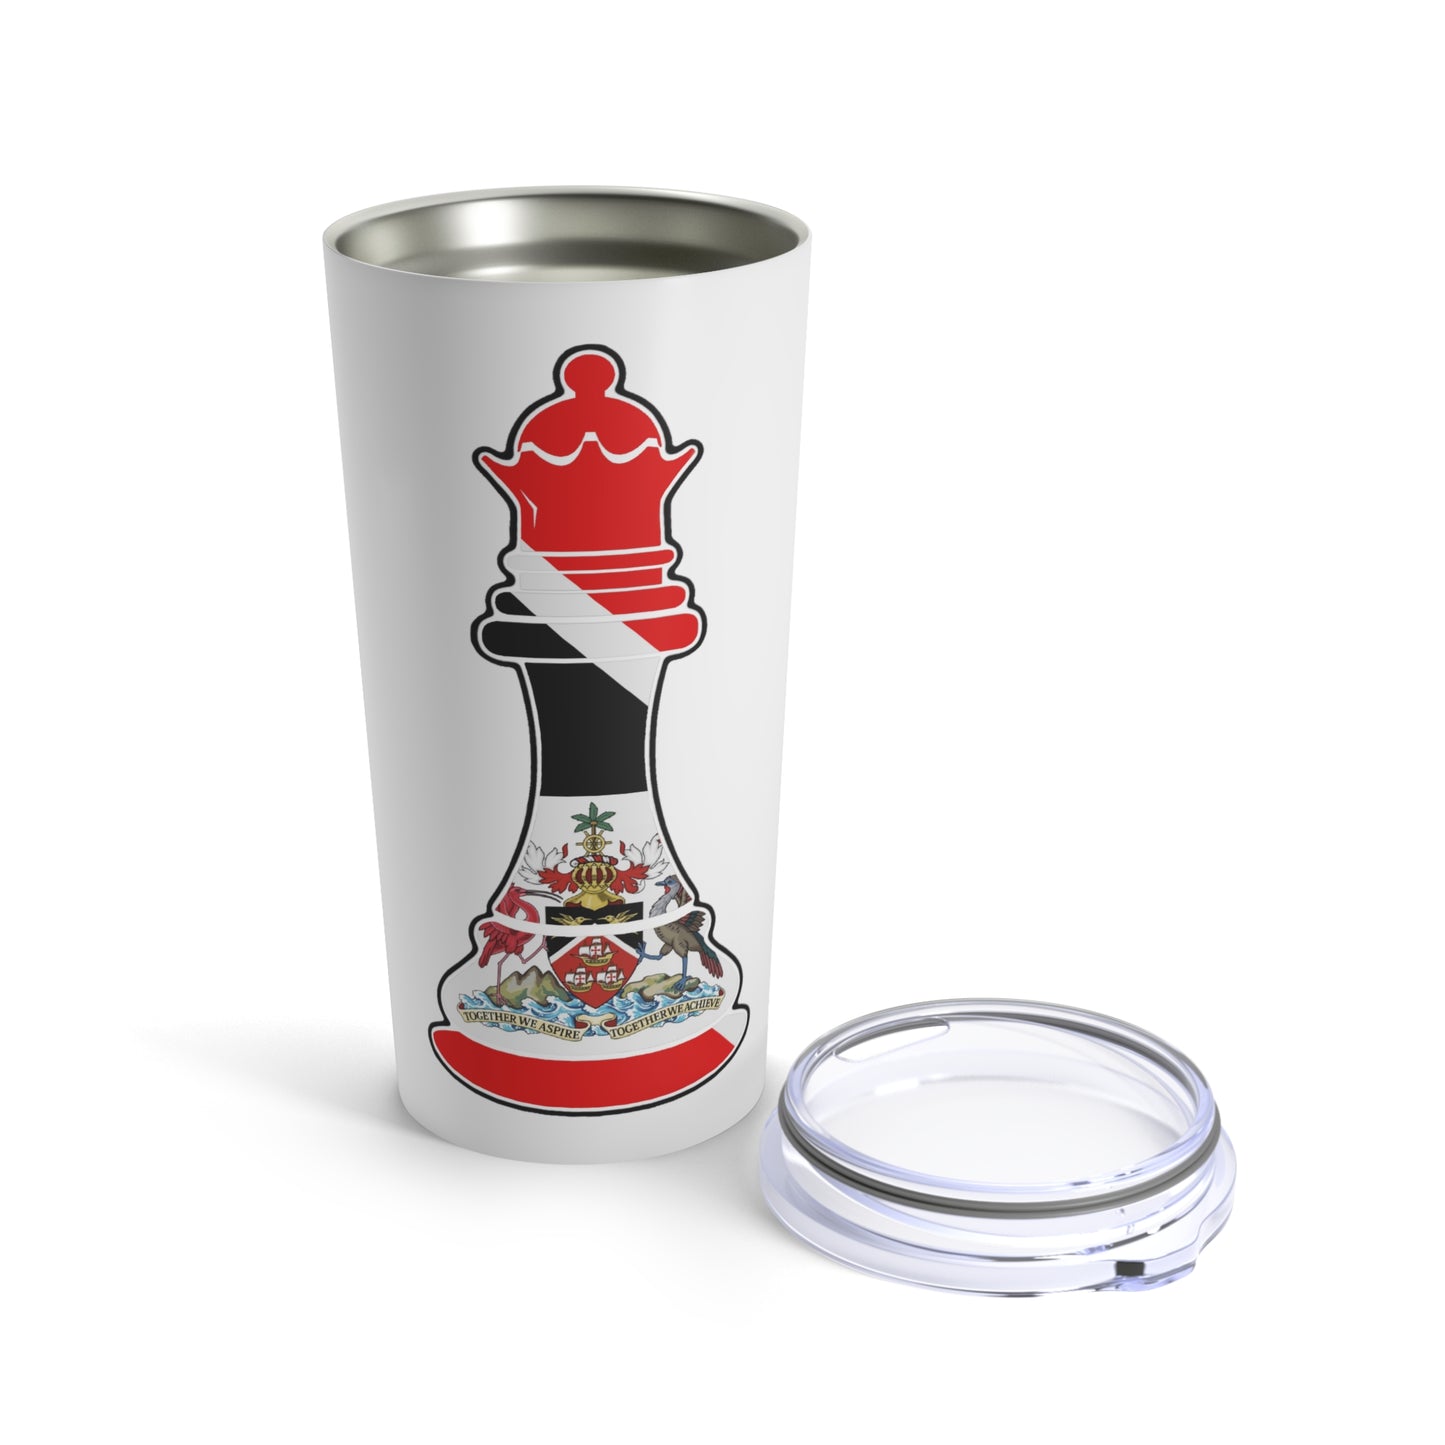 Trini Queen Coat of Arms Trinidad and Tobago Flag Chess Piece Tumbler 20oz Beverage Container